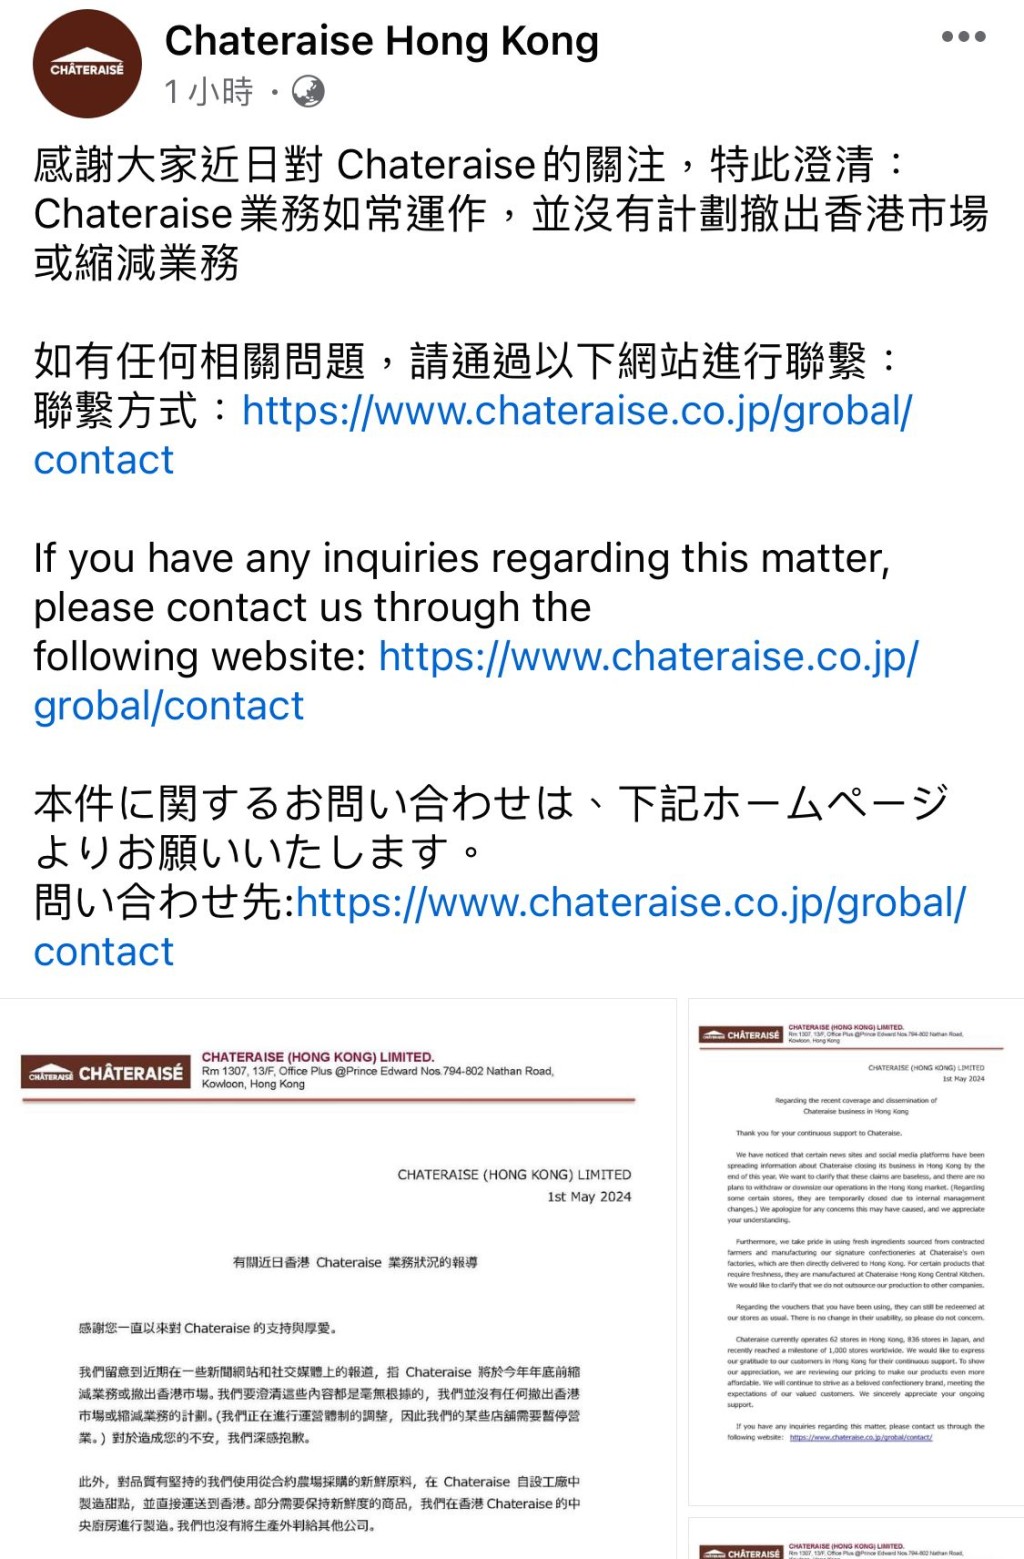 Chateraise5月1日於社交平台Facebook專頁發文，澄清無計劃縮減業務或撤出香港市場